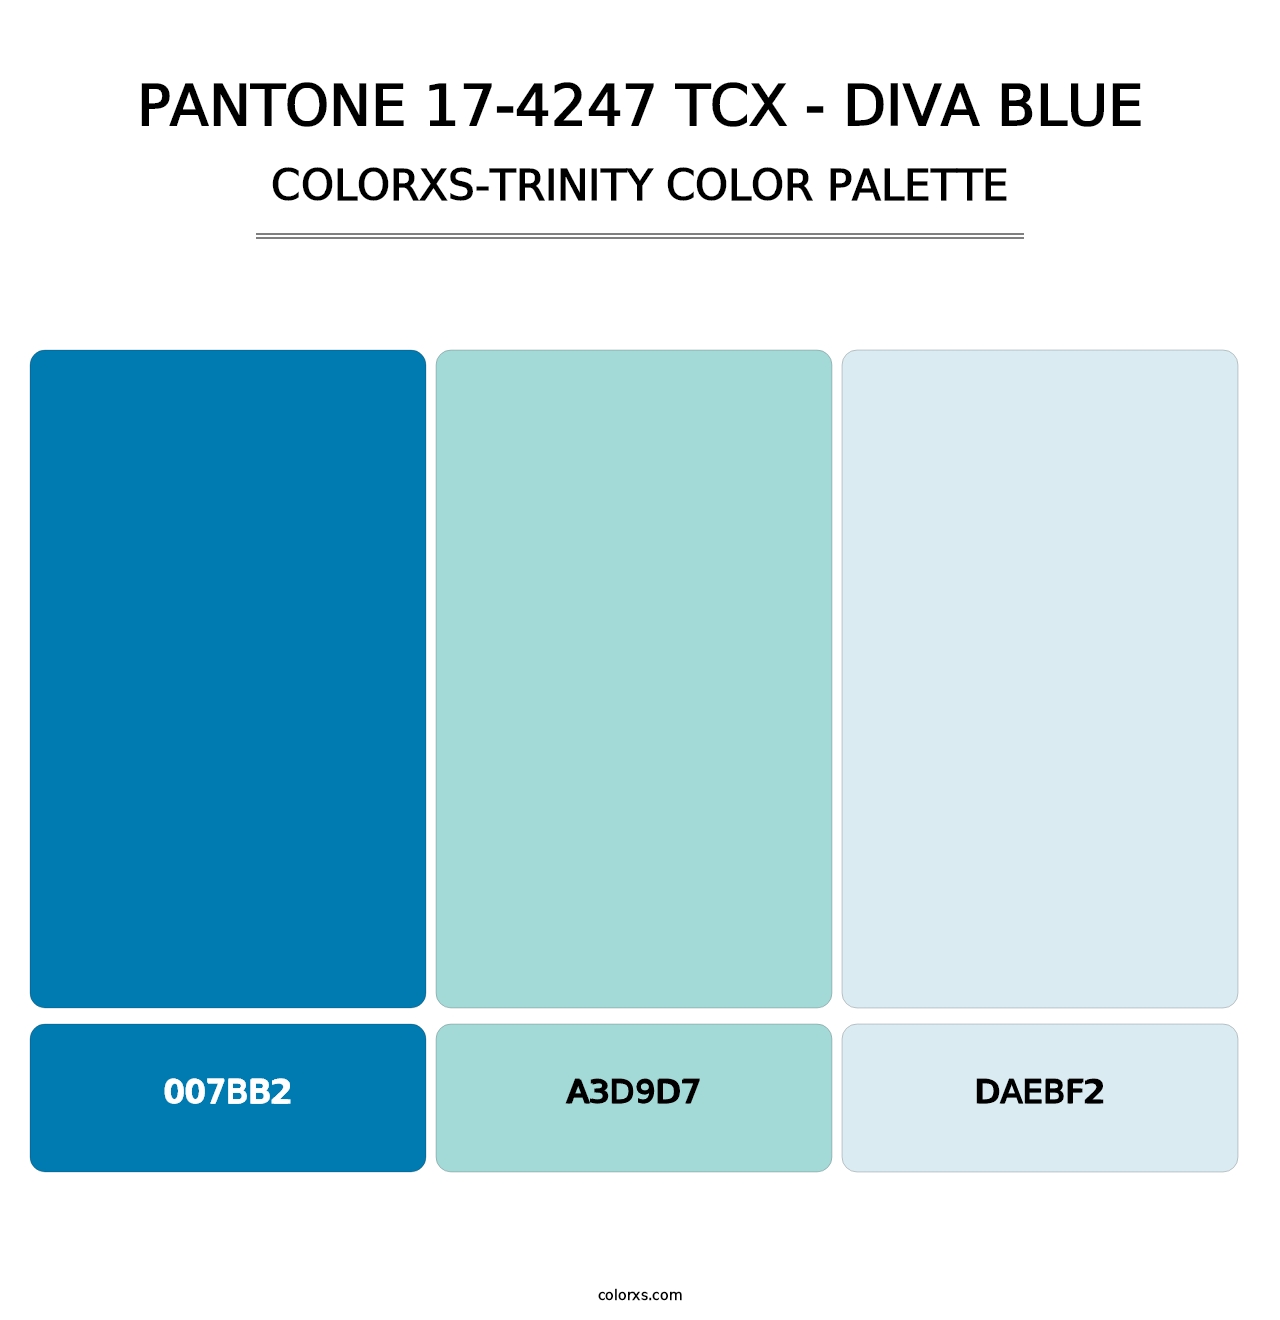 PANTONE 17-4247 TCX - Diva Blue - Colorxs Trinity Palette